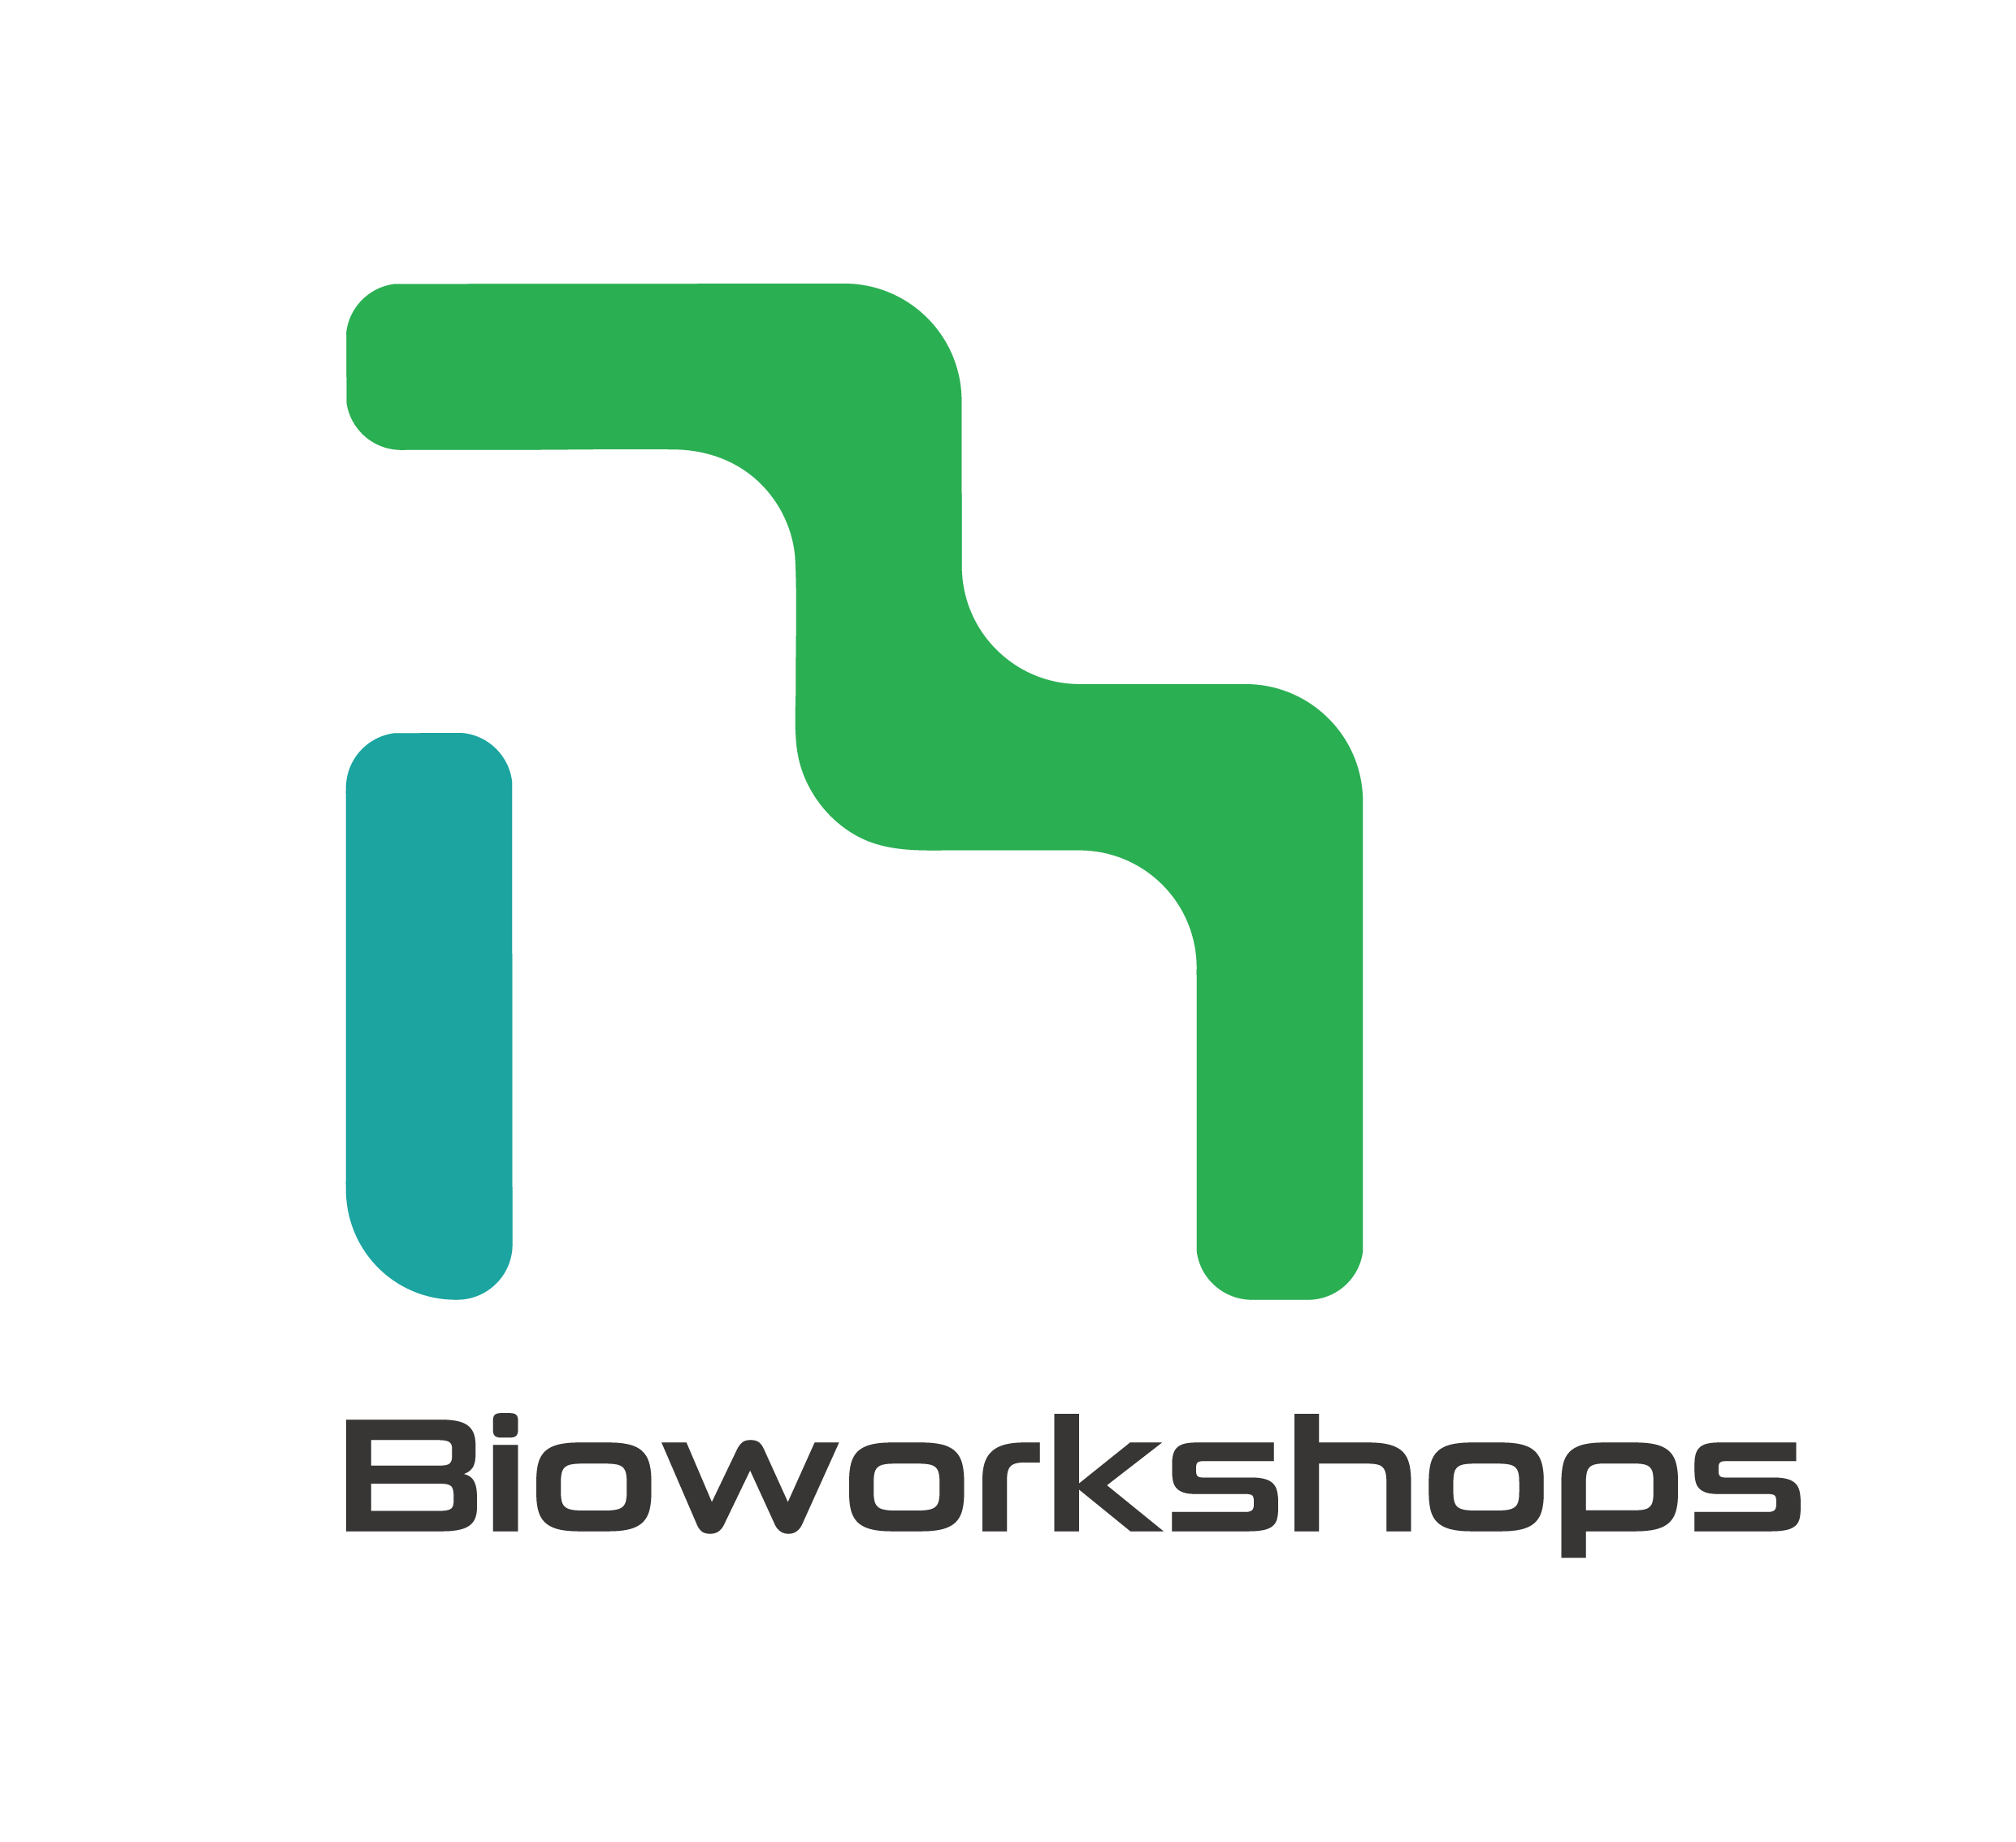 Bioworkshops